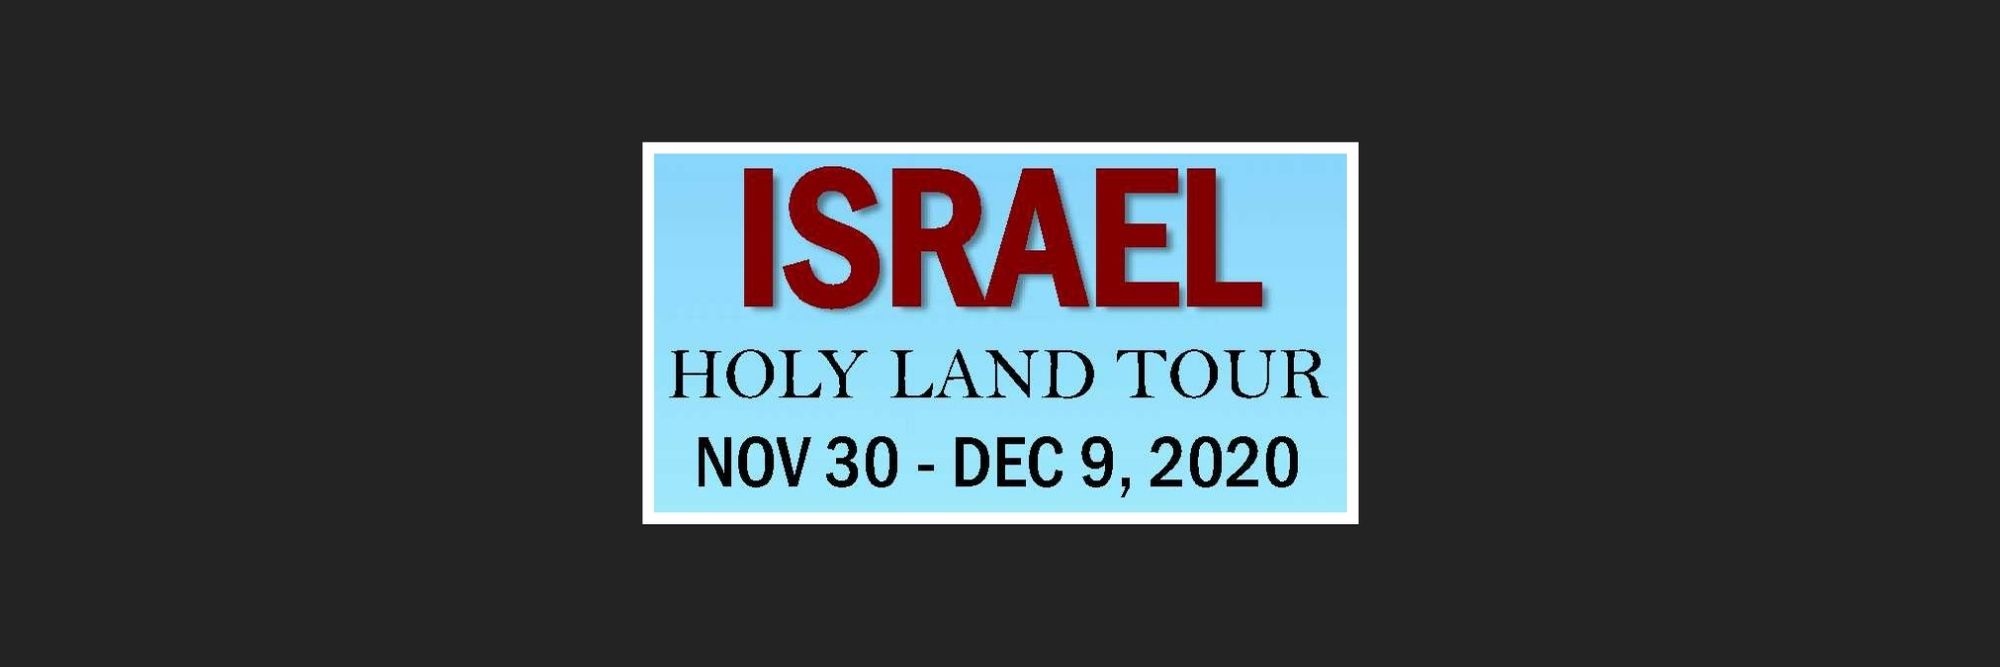 Israel Holy Land Tour 2020